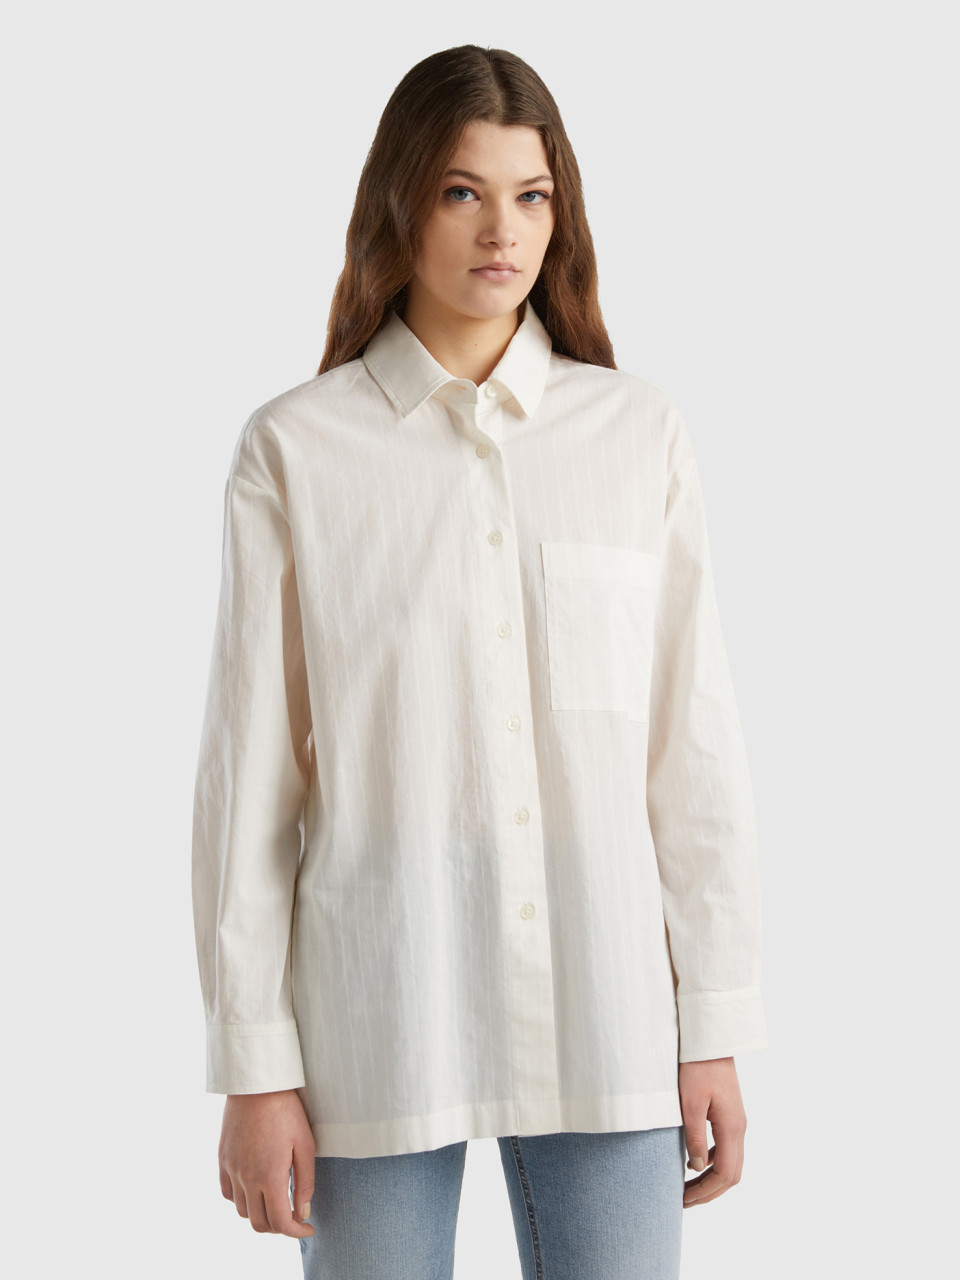 Benetton, Lightweight Oversized Shirt With Slits, Creamy White, Women